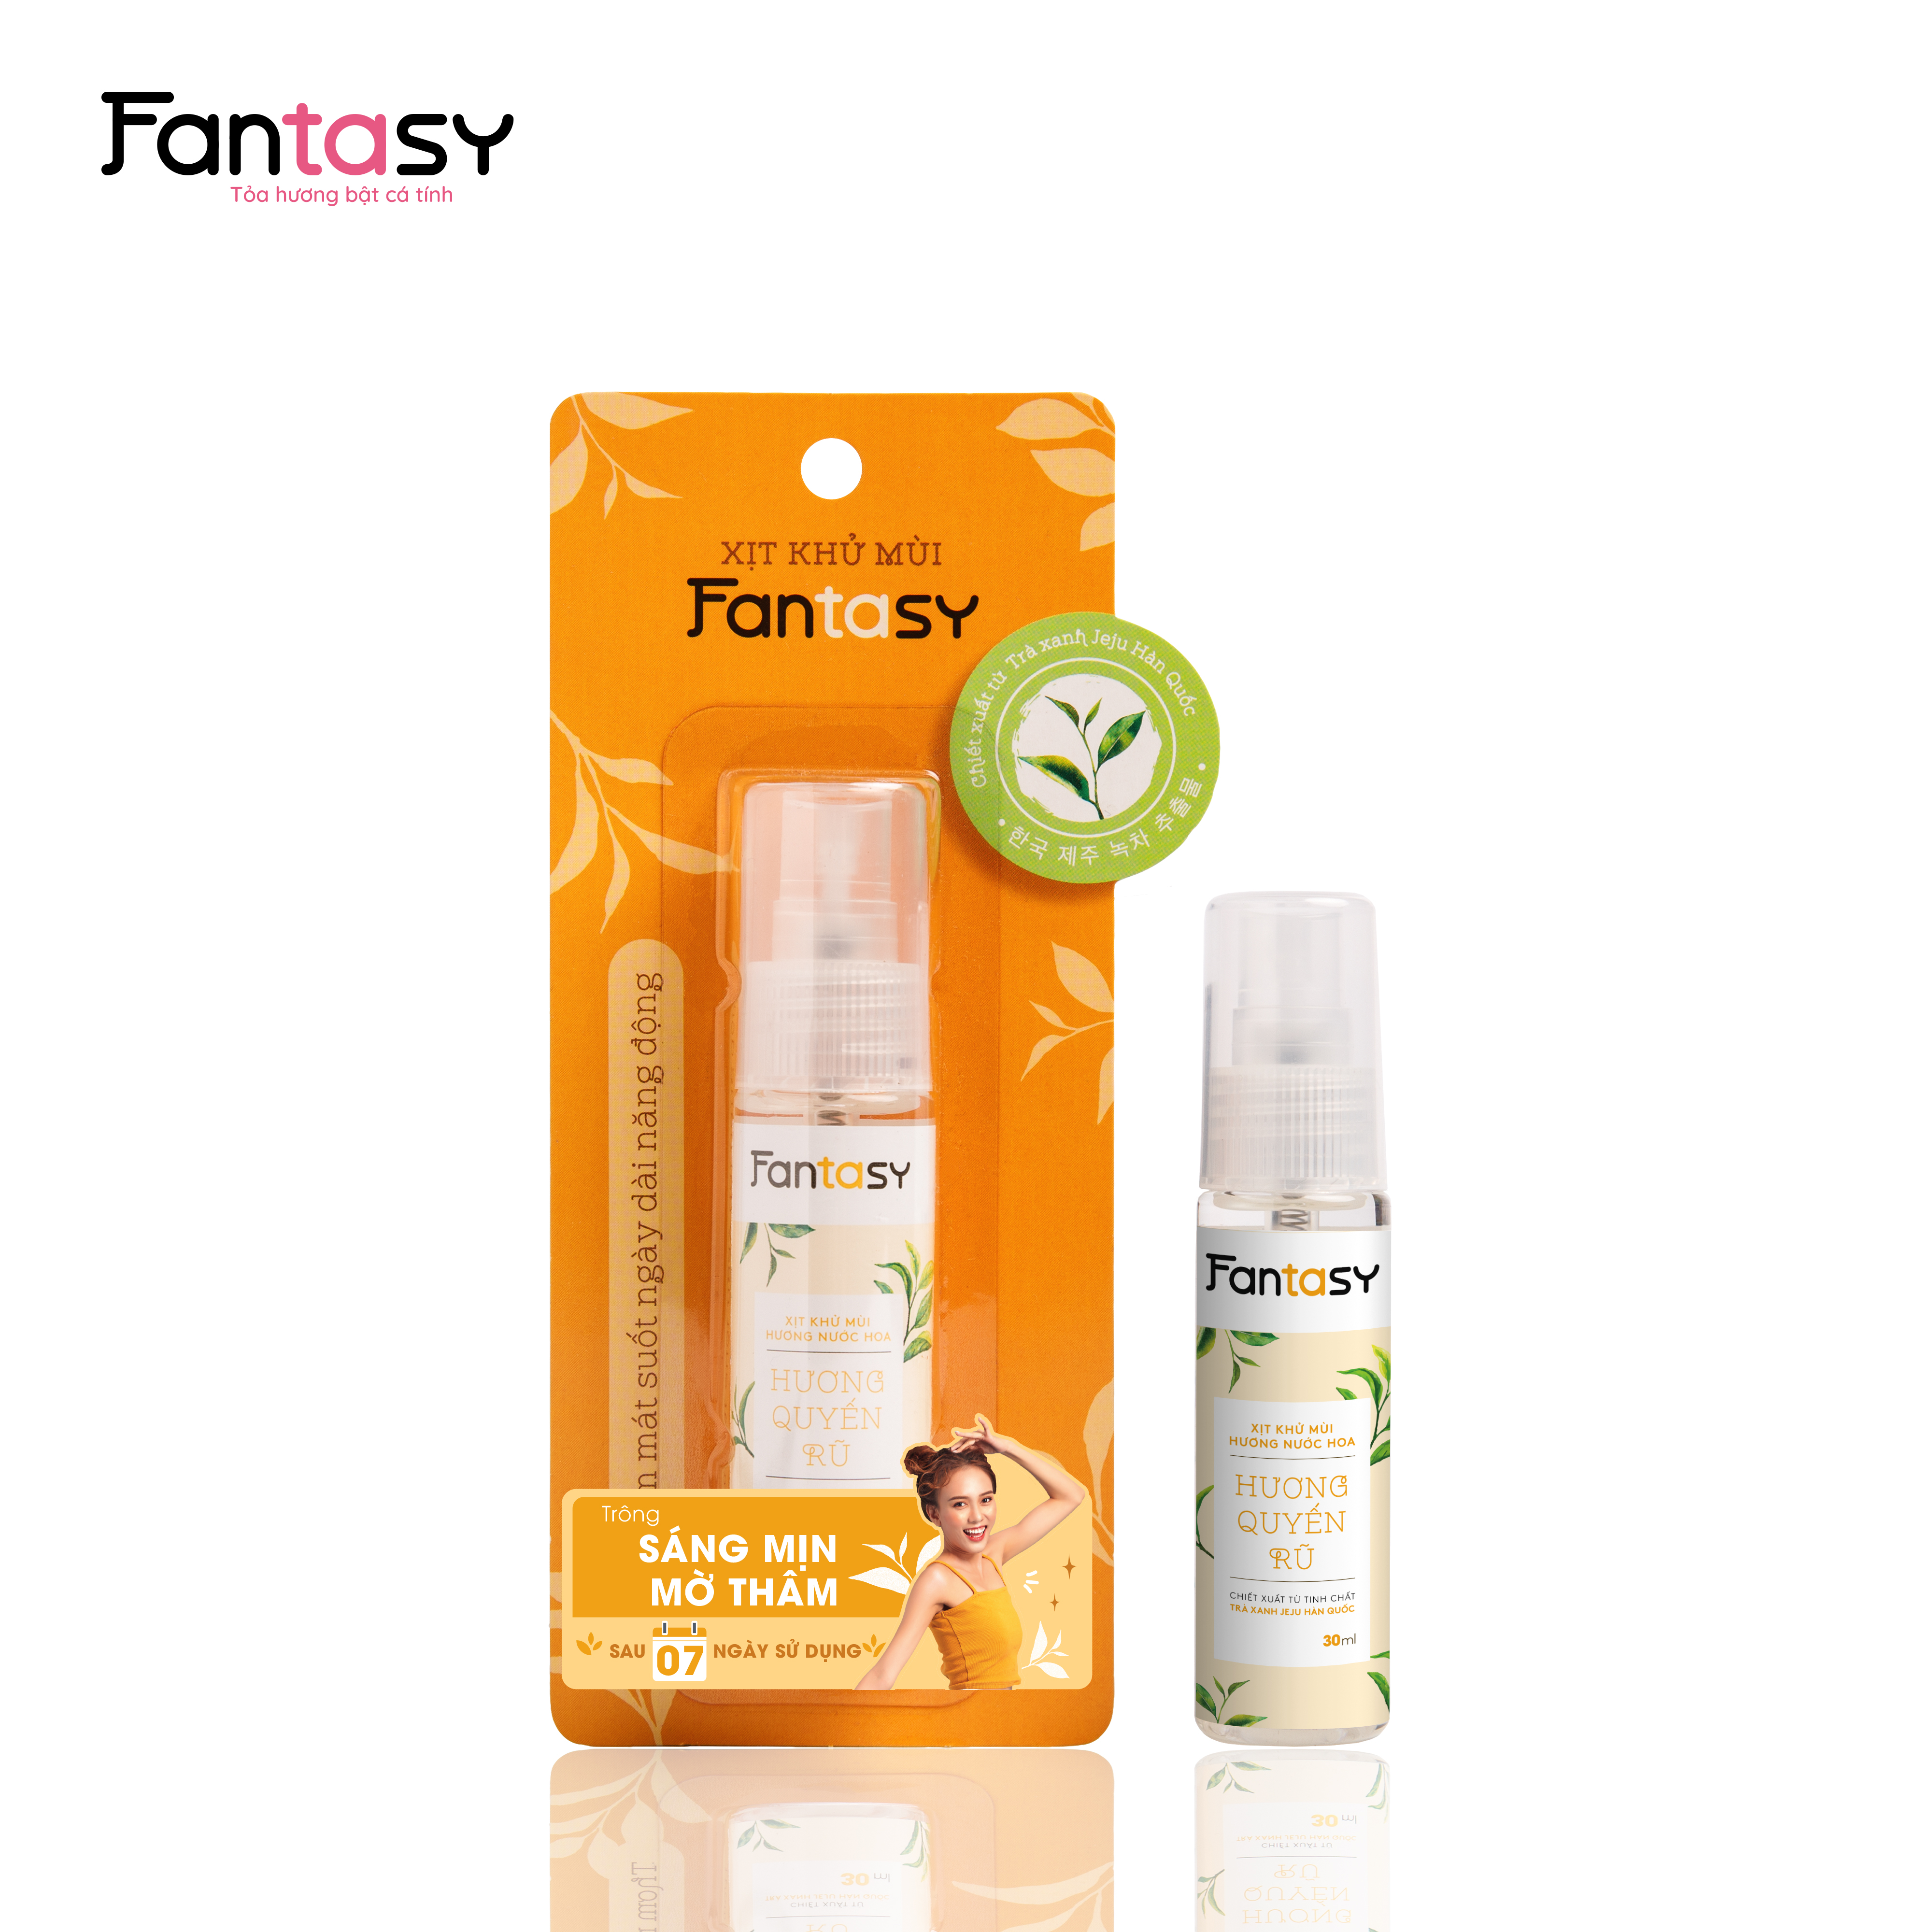 Fantasy perfumed deodorant spray - Charming